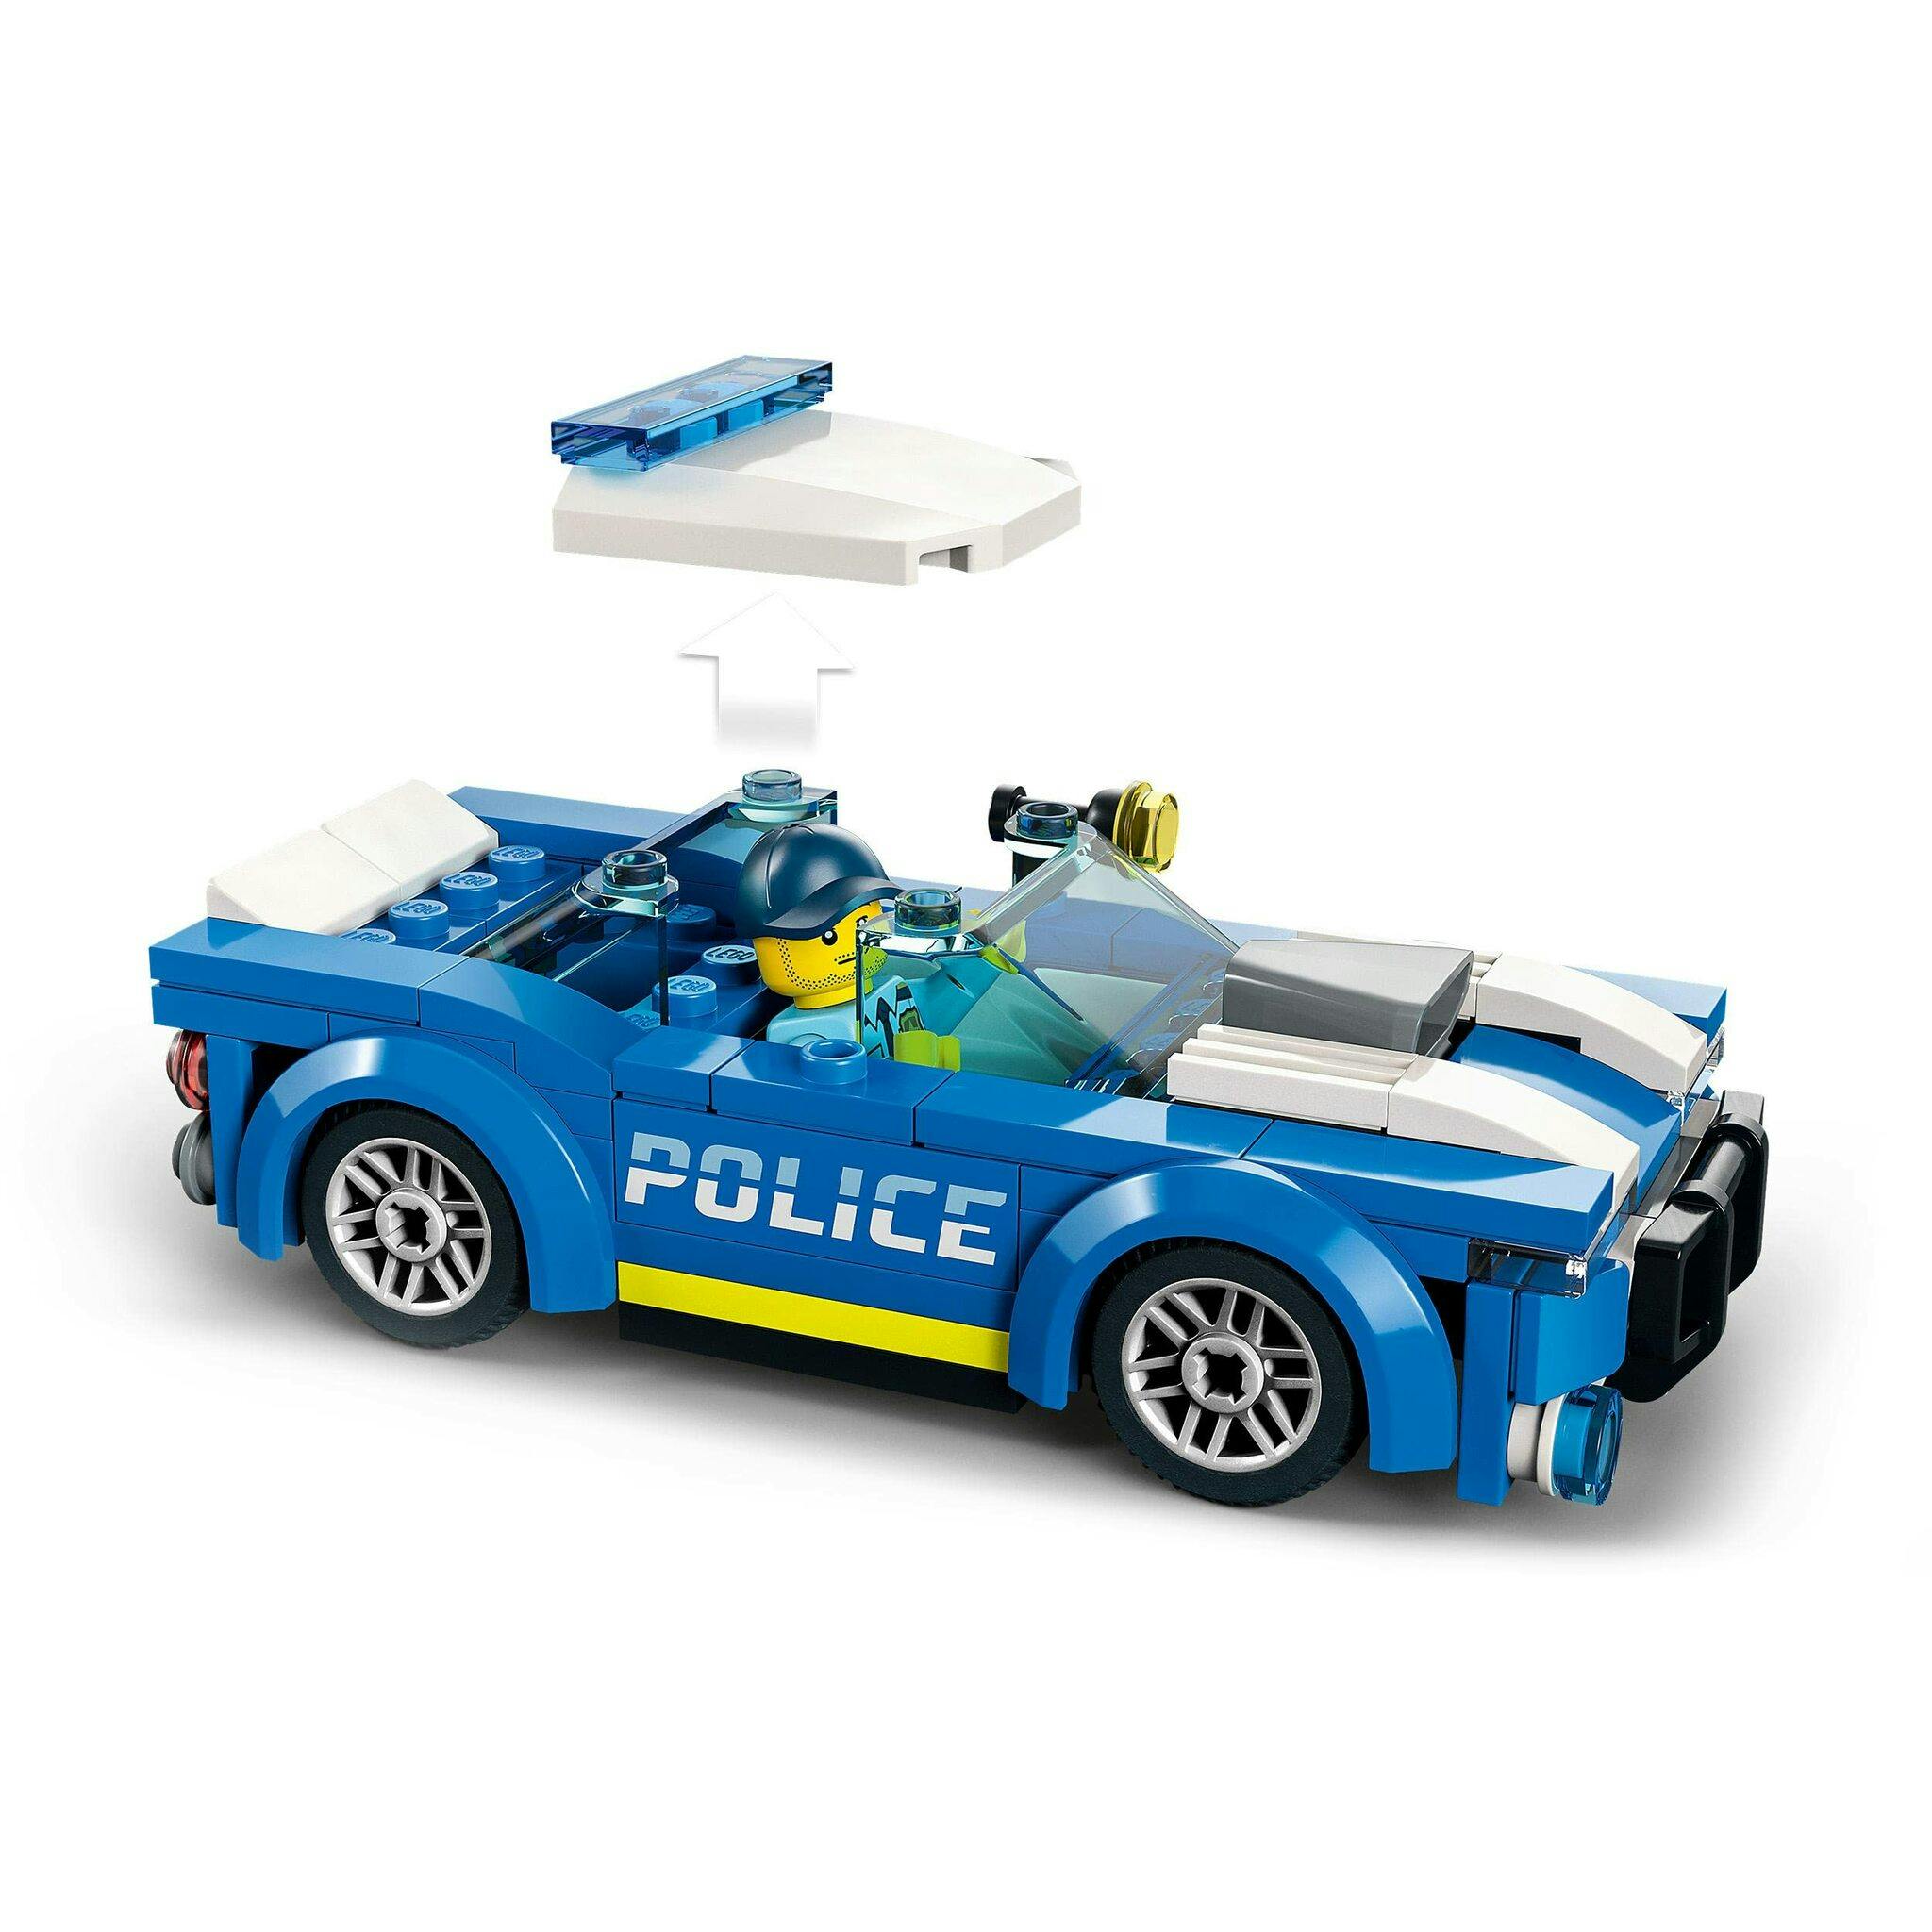 LEGO City Polisbil, 60312